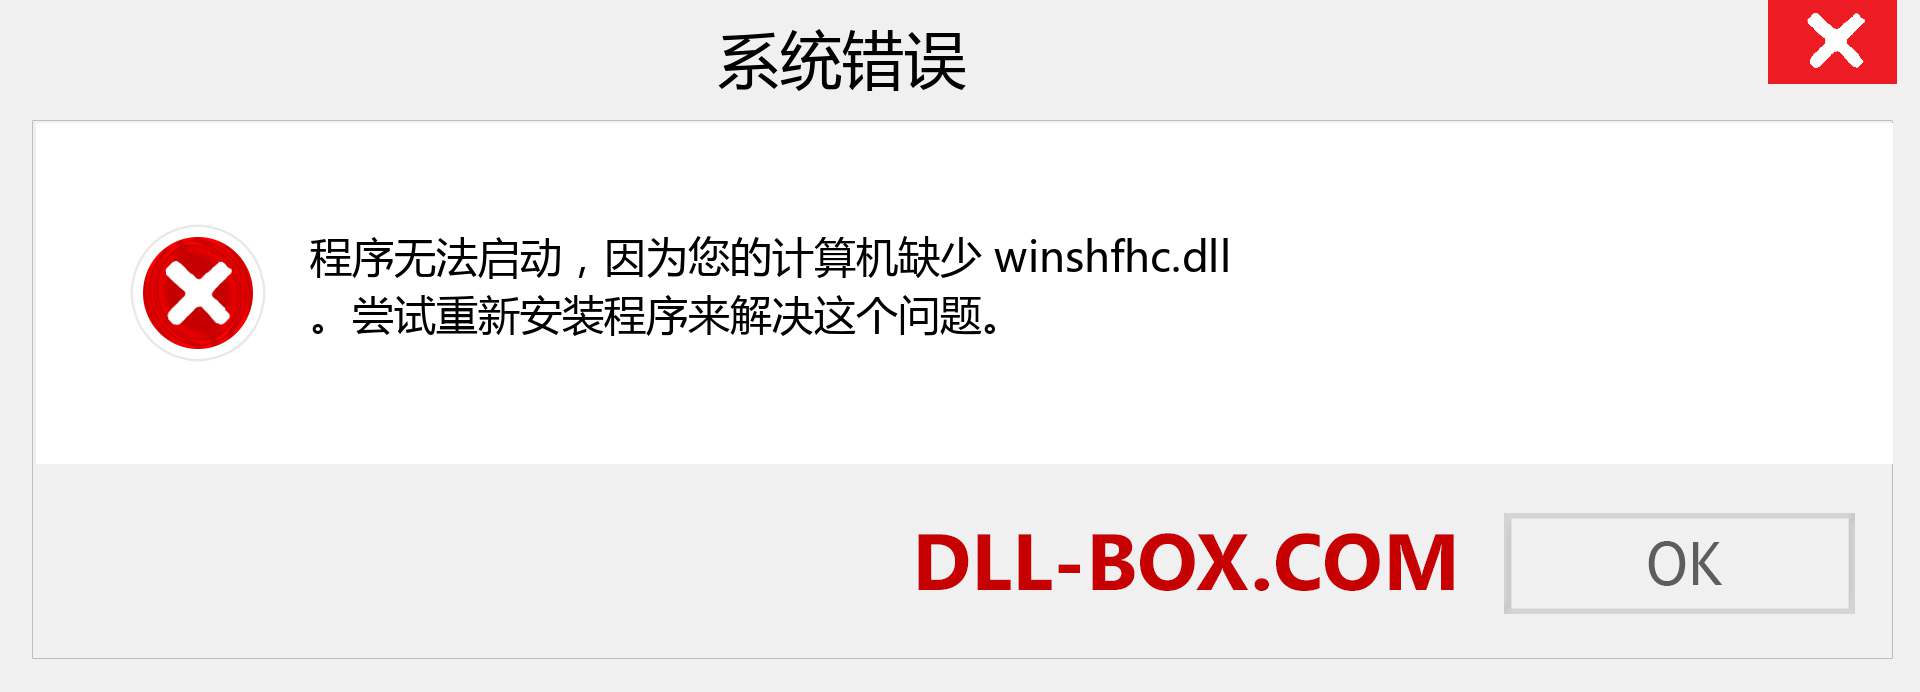 winshfhc.dll 文件丢失？。 适用于 Windows 7、8、10 的下载 - 修复 Windows、照片、图像上的 winshfhc dll 丢失错误